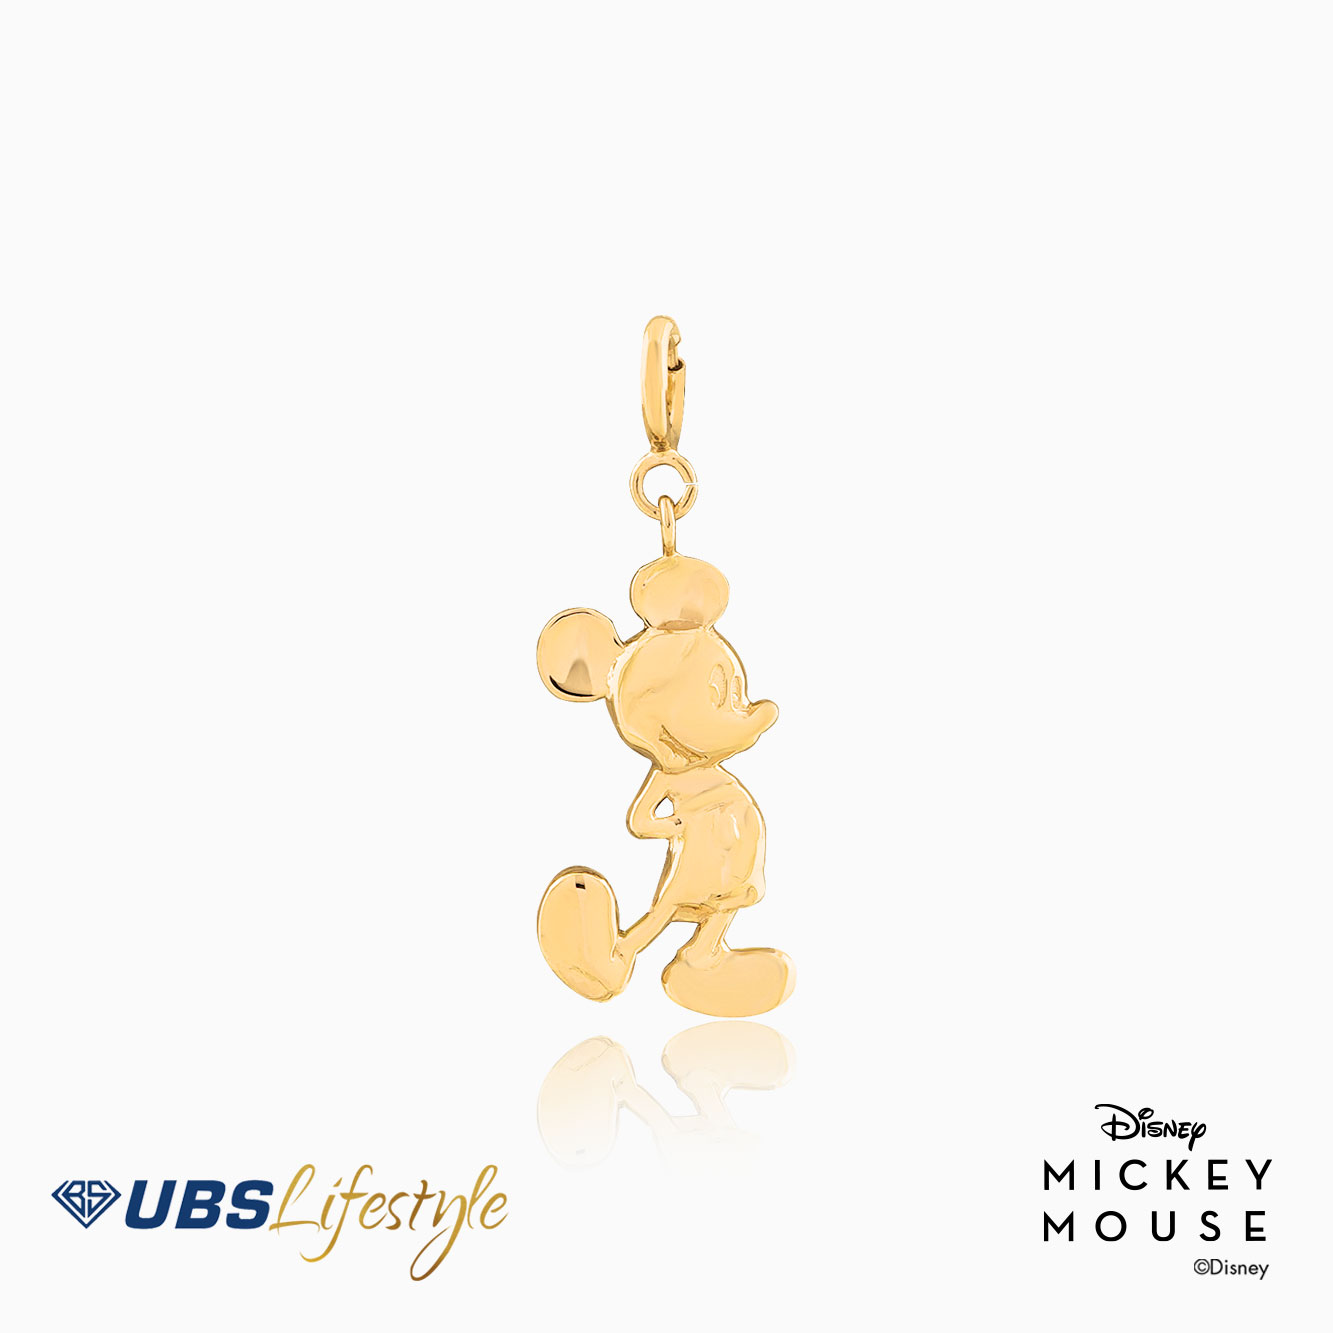 UBS Liontin Emas Disney Mickey Mouse - Cmy0099 - 17K